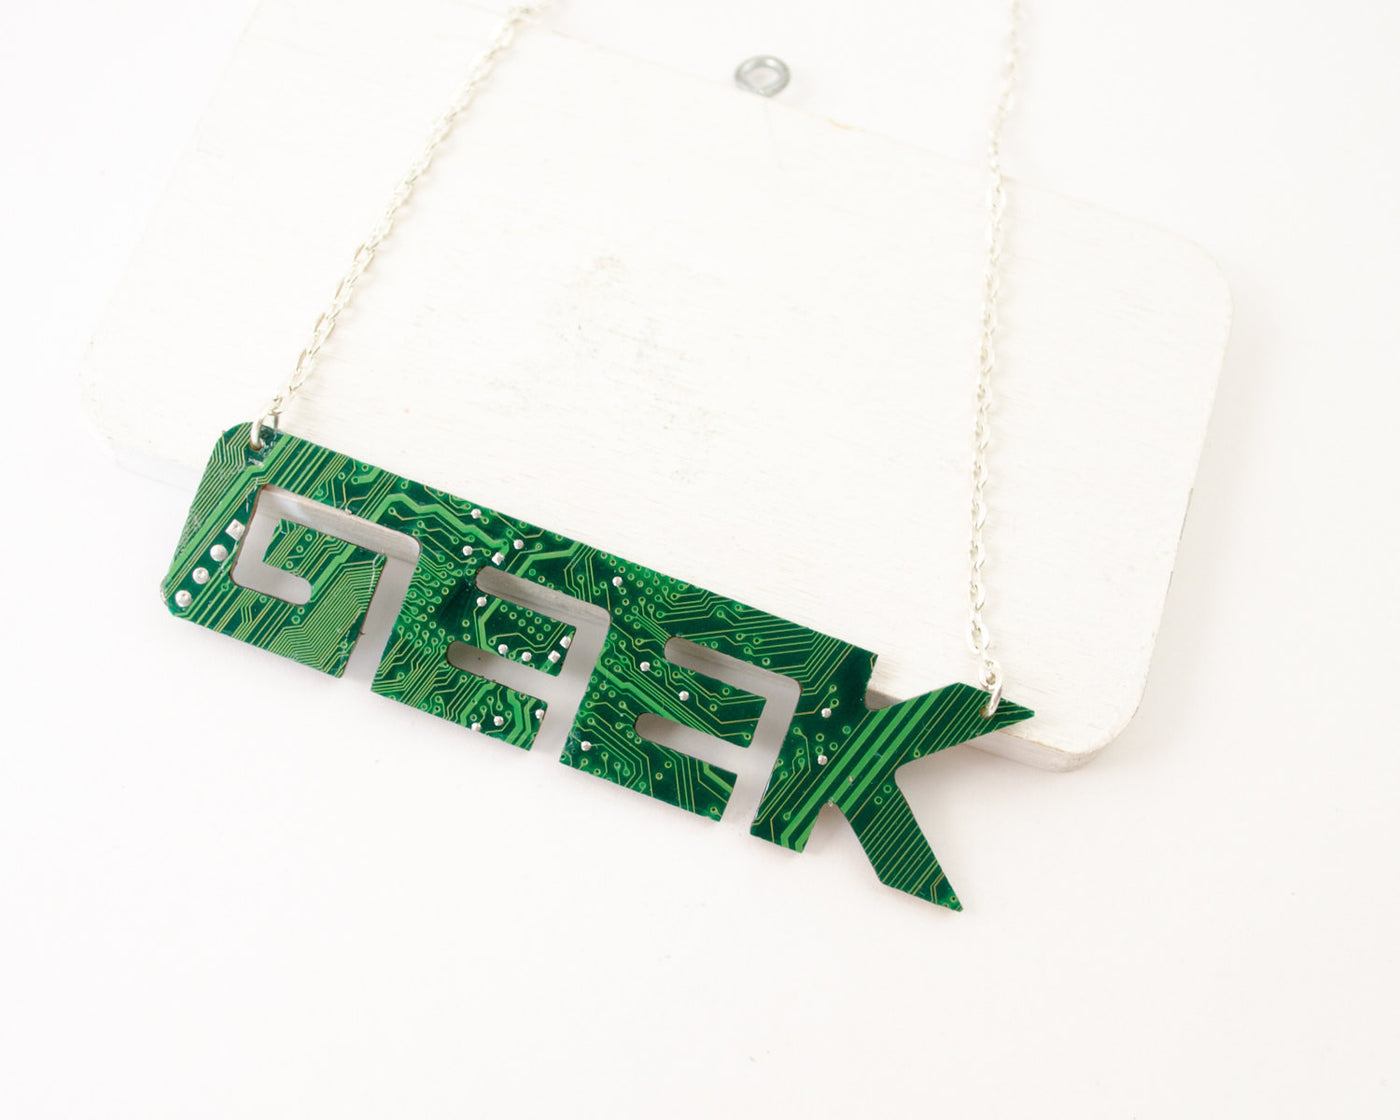 geek word necklace in circuit board